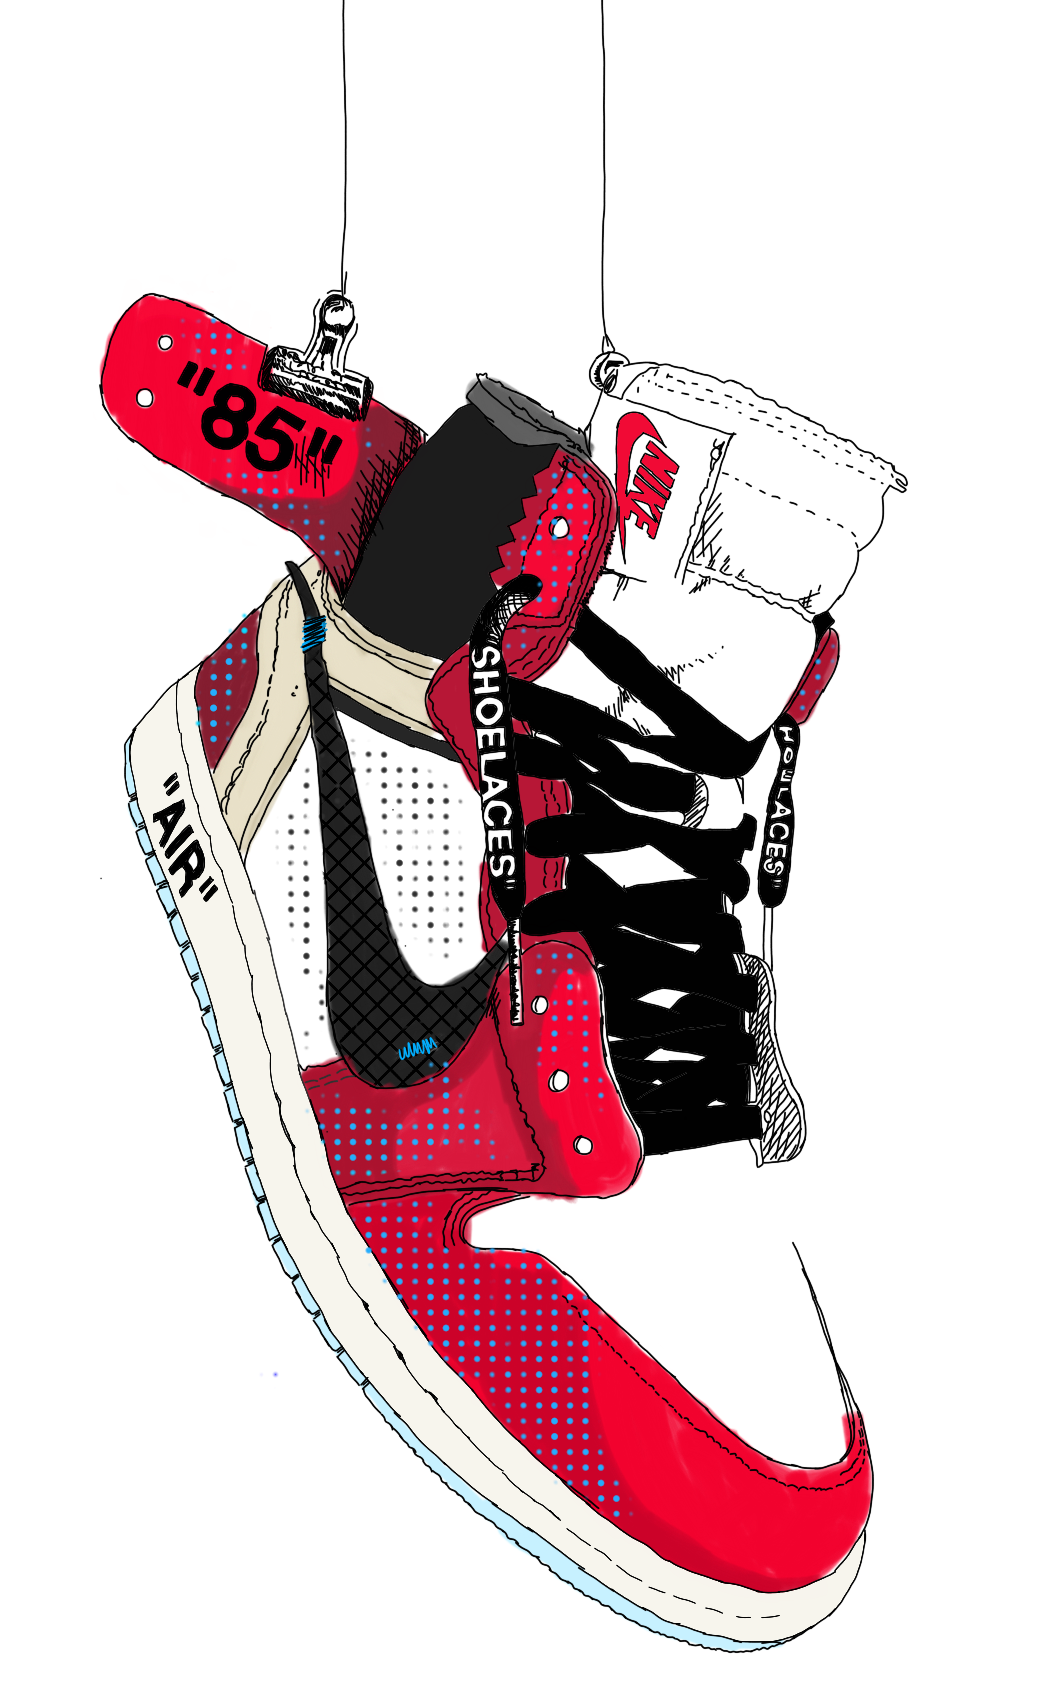 Download Air Jordan Shoes With Supreme Wallpaper